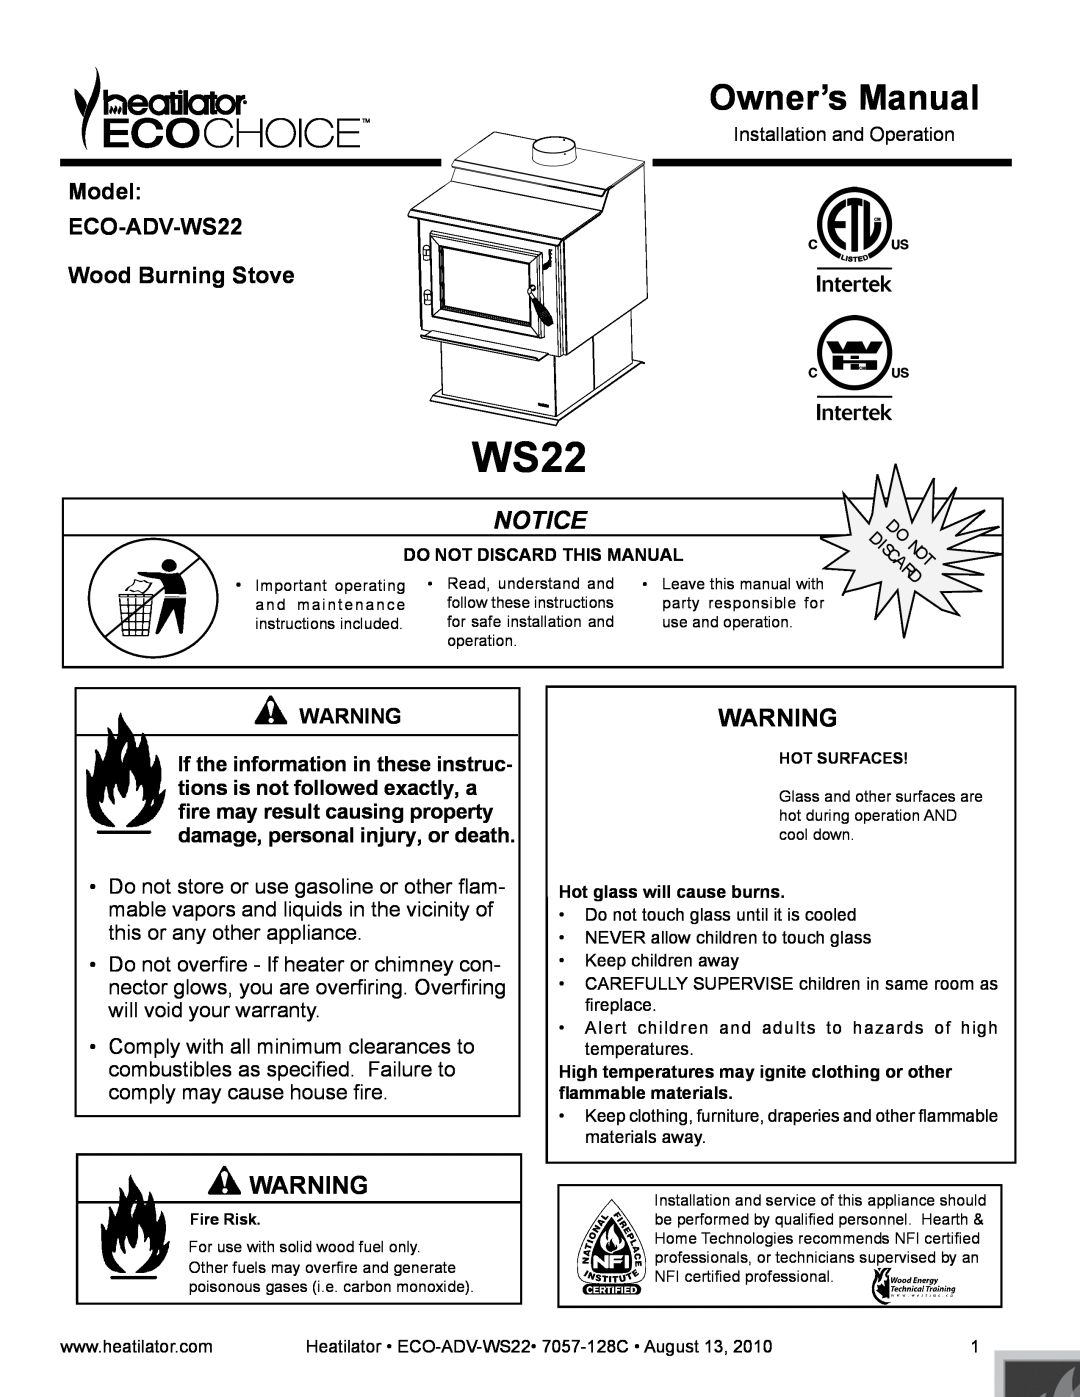 Heatiator warranty Do Dis Not C Ar D, Model ECO-ADV-WS22 Wood Burning Stove 